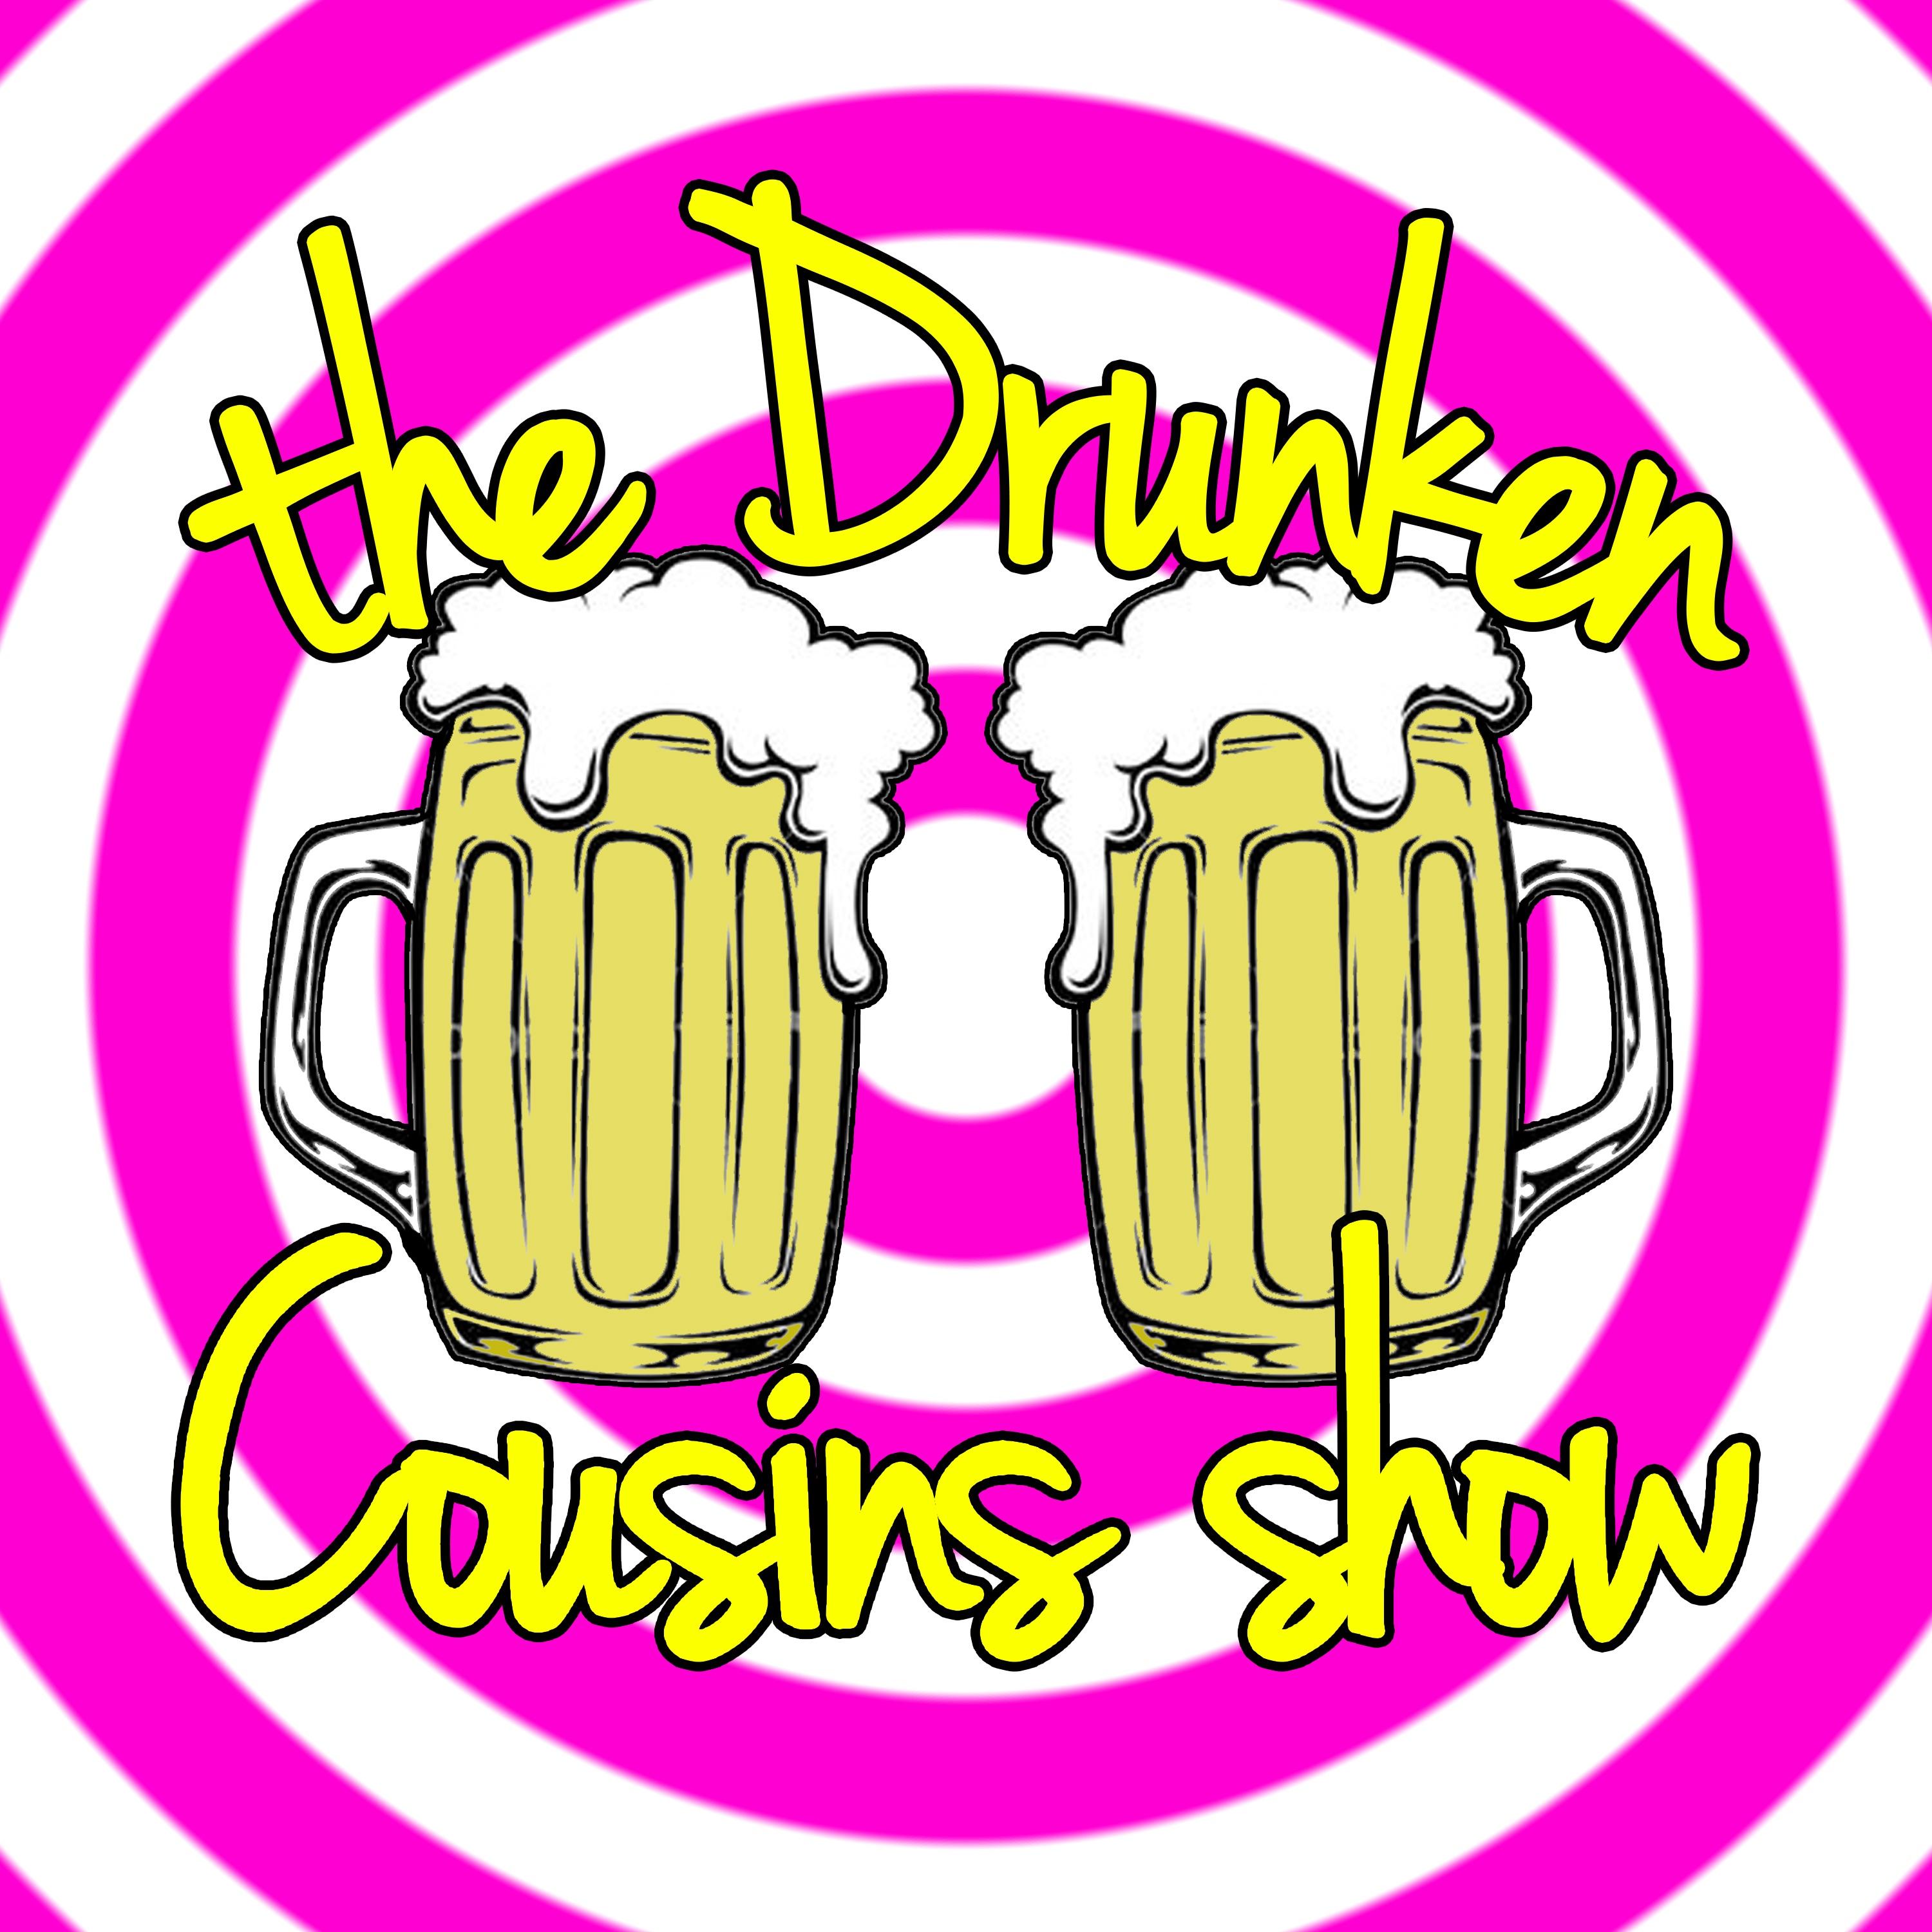 The Drunken Cousins Show